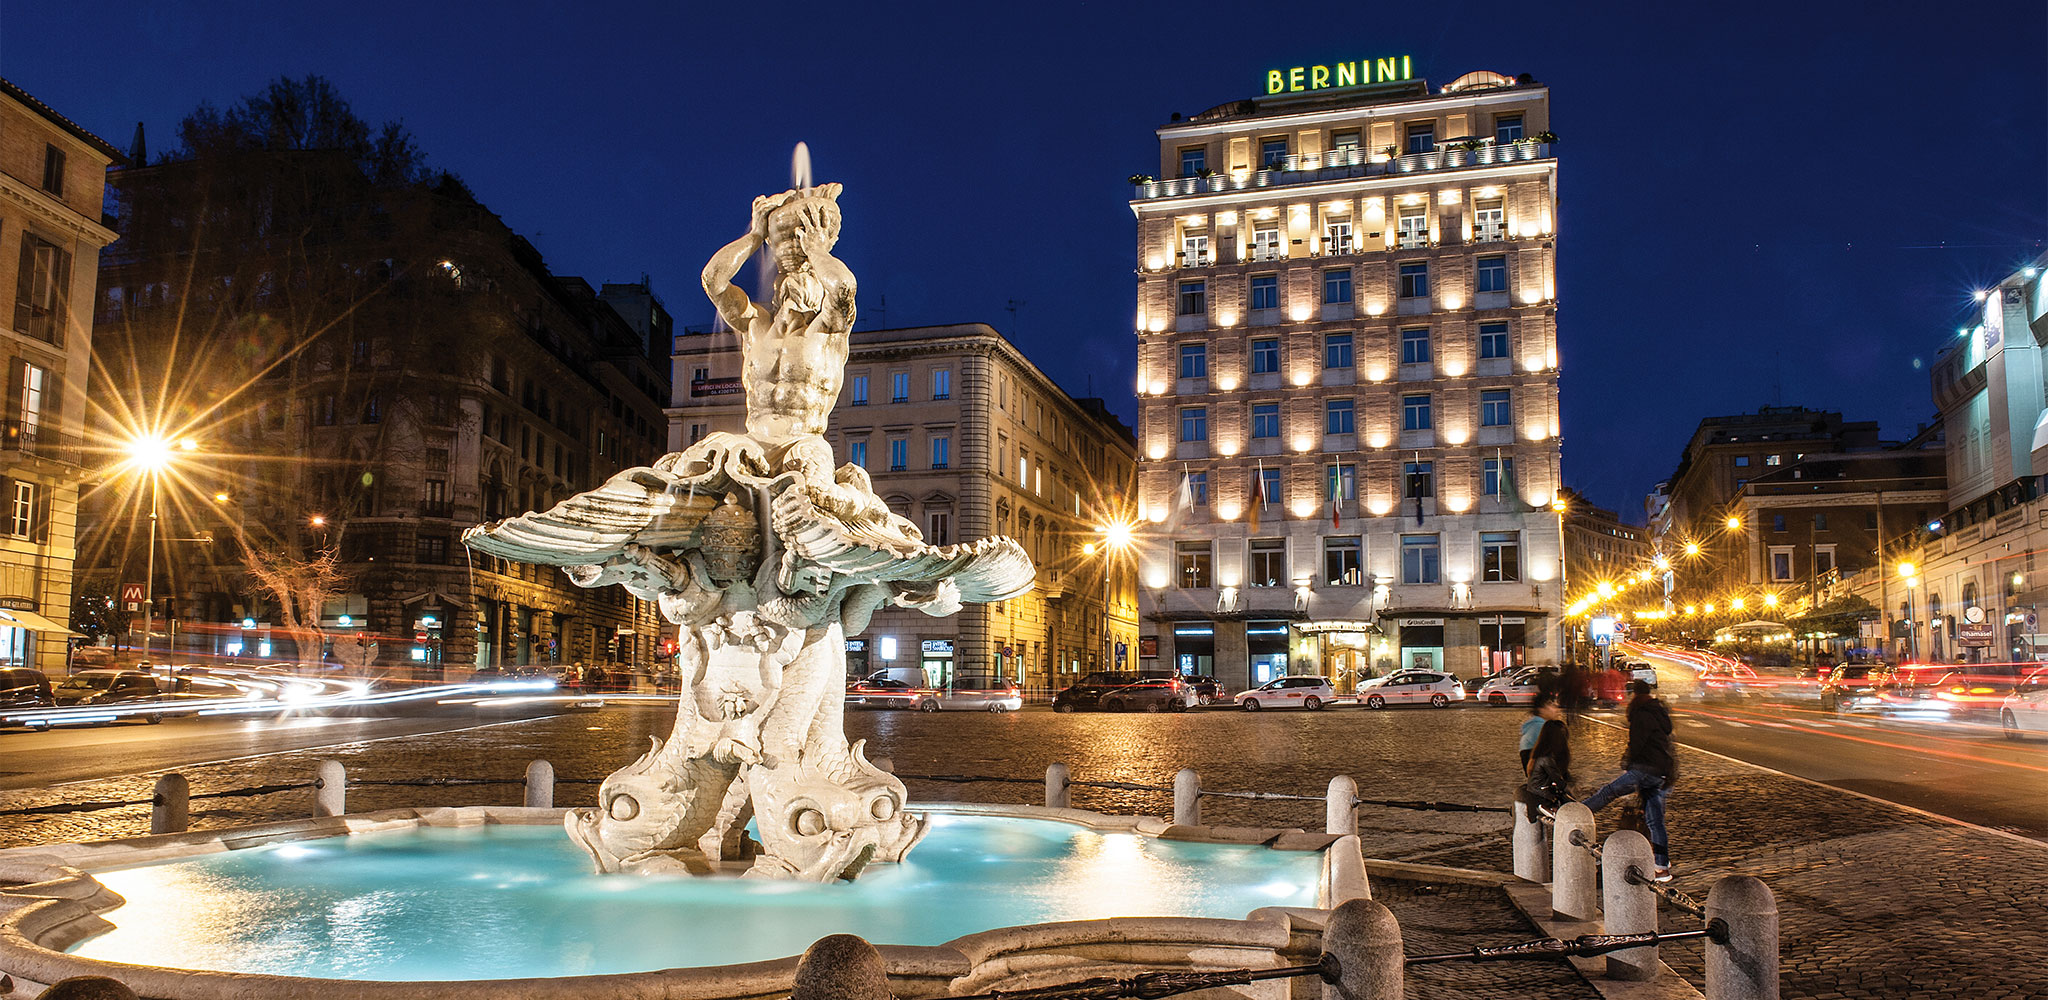 Luxury-hotel-Rome-evening-facade-Bernini-Bristol (1)